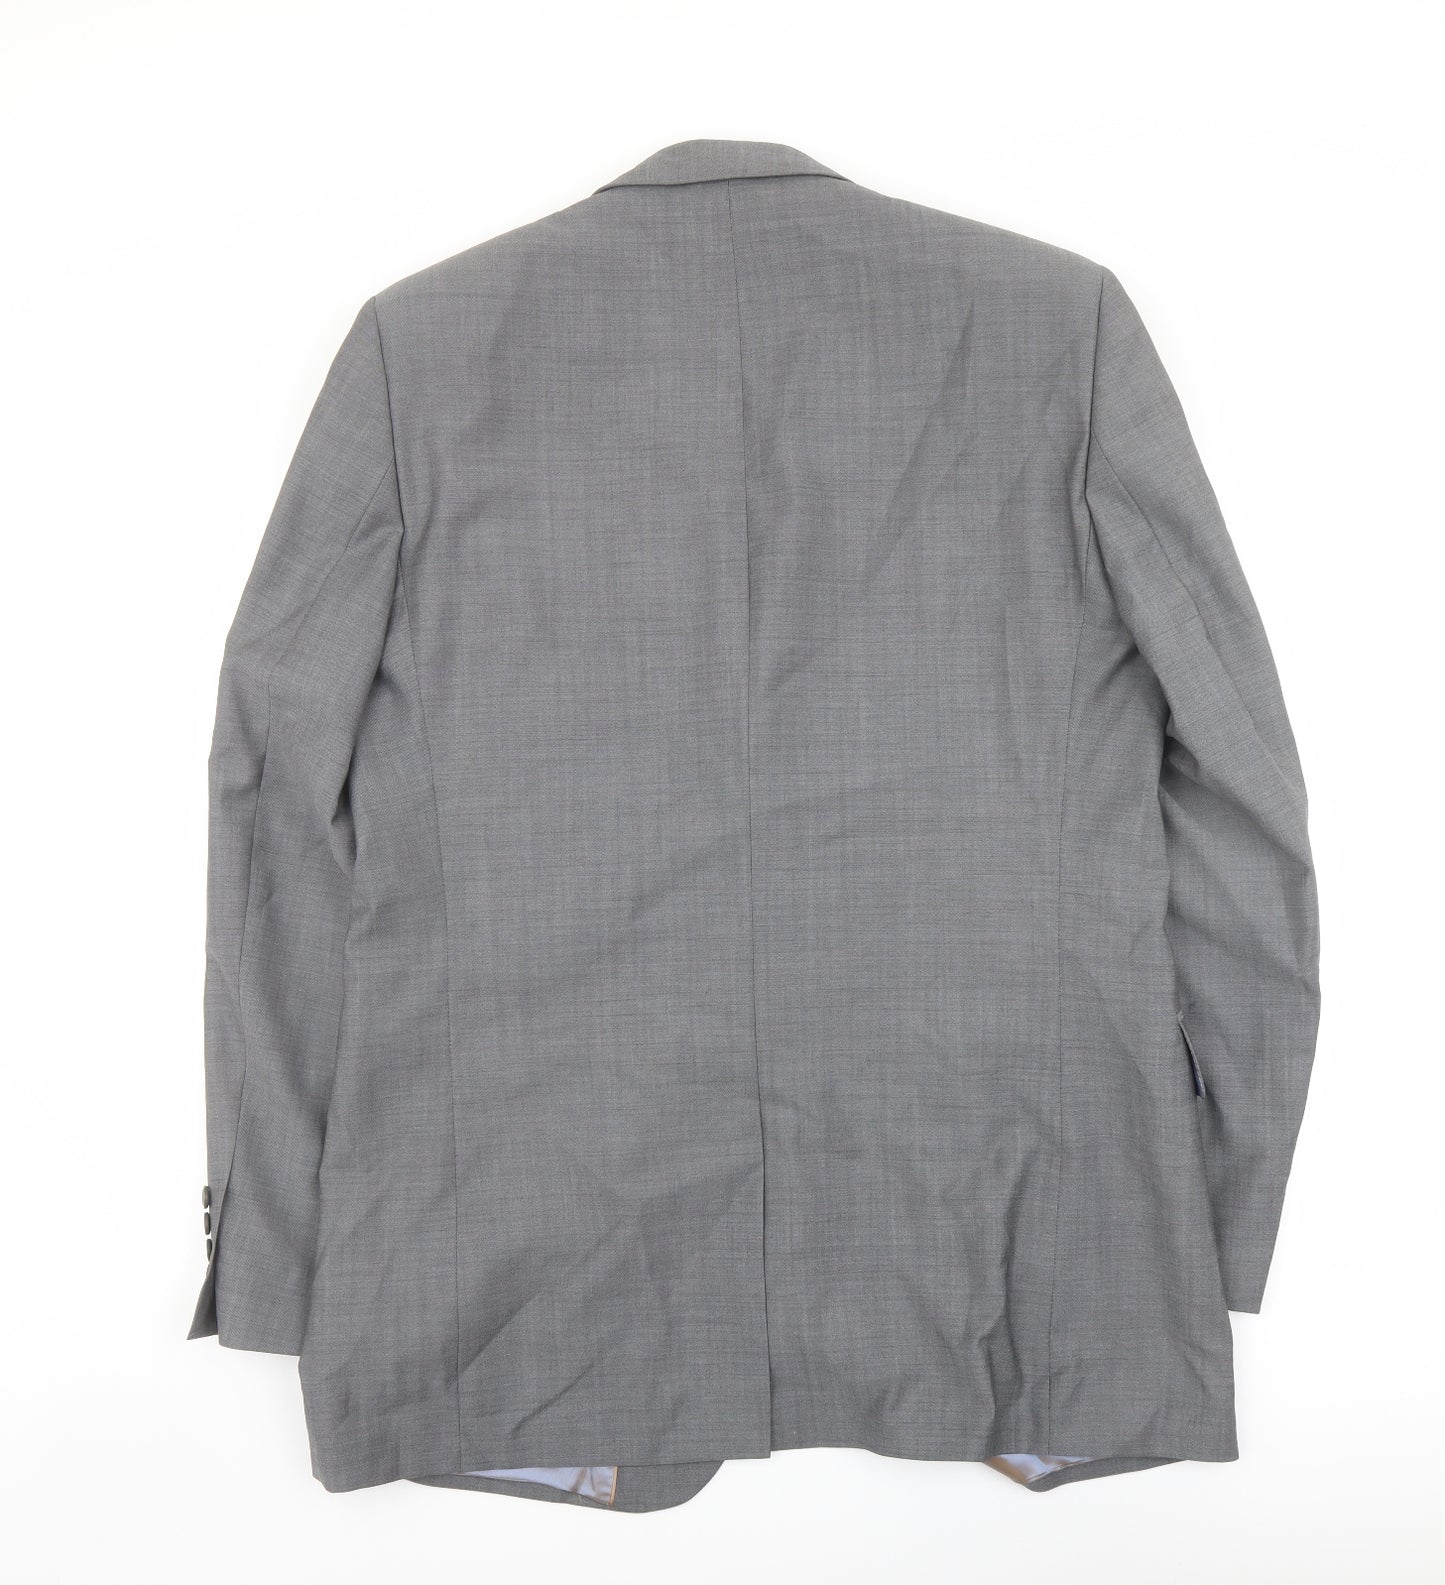 Linea Mens Grey Wool Jacket Suit Jacket Size 42 Regular